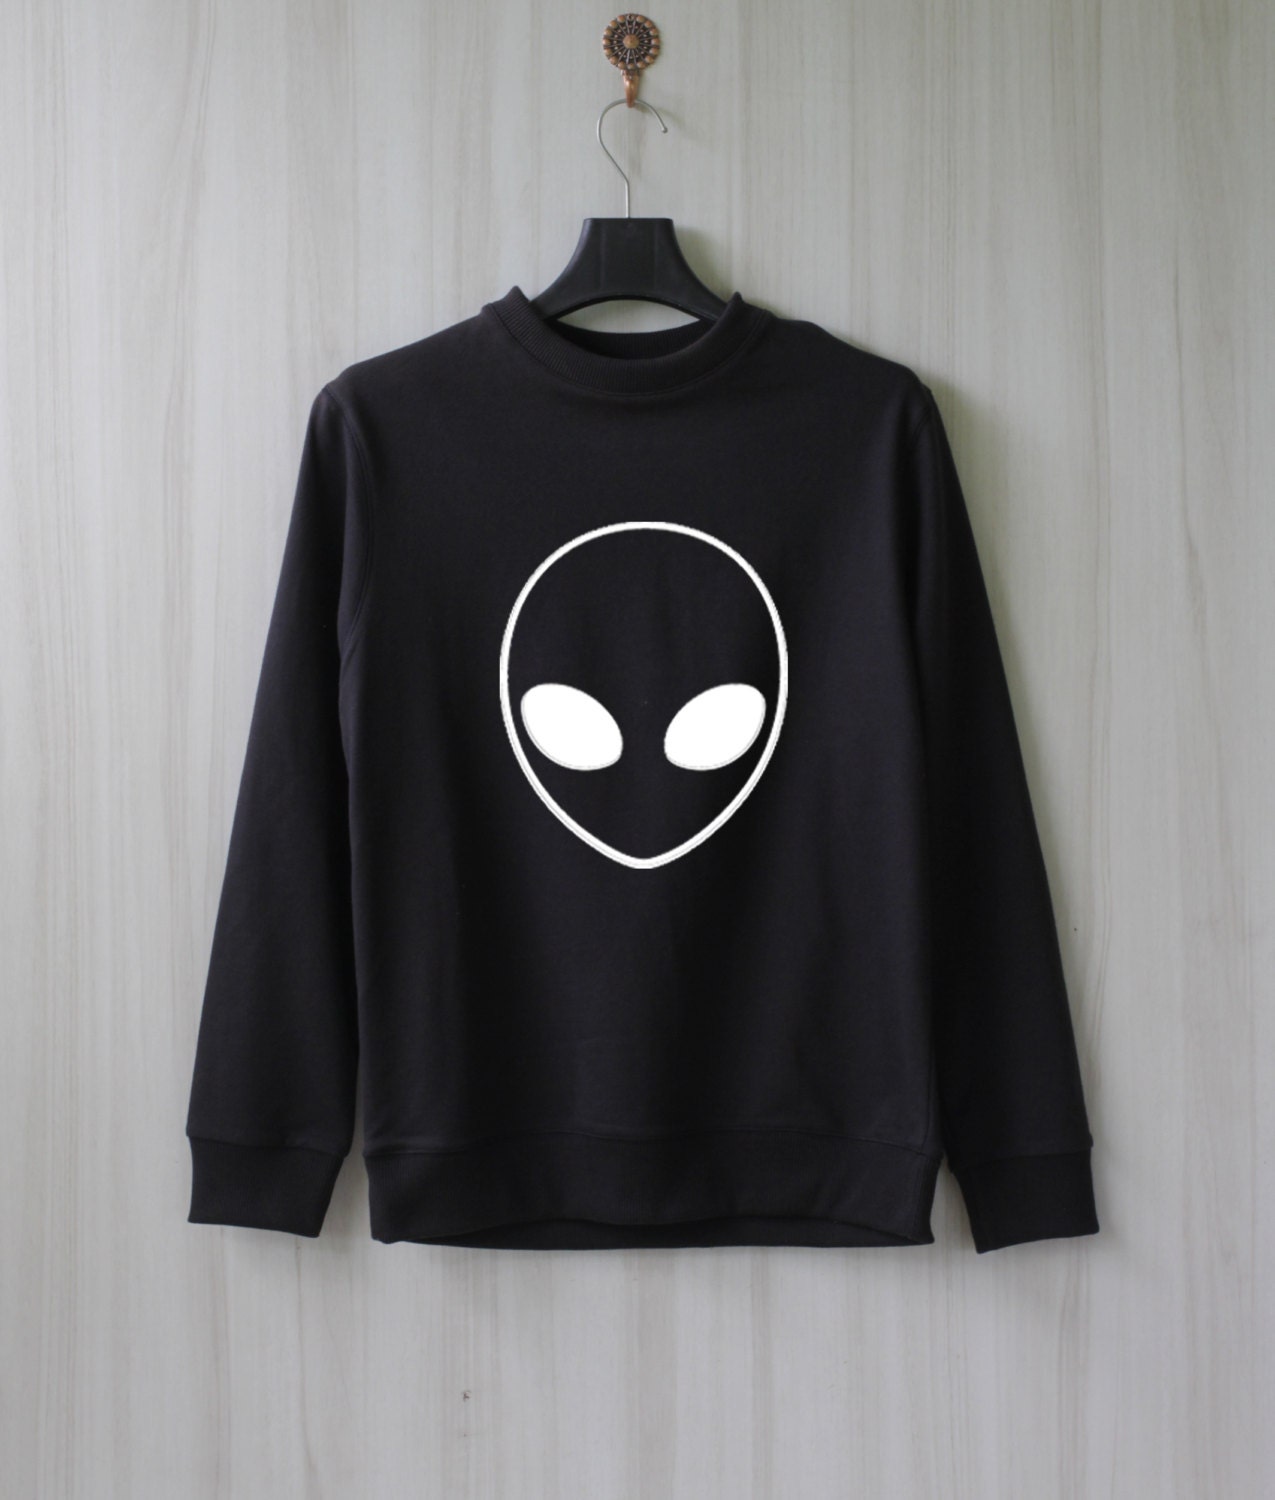 Alien Sweatshirt Sweater Jumper Pullover Shirt Size XS S M L